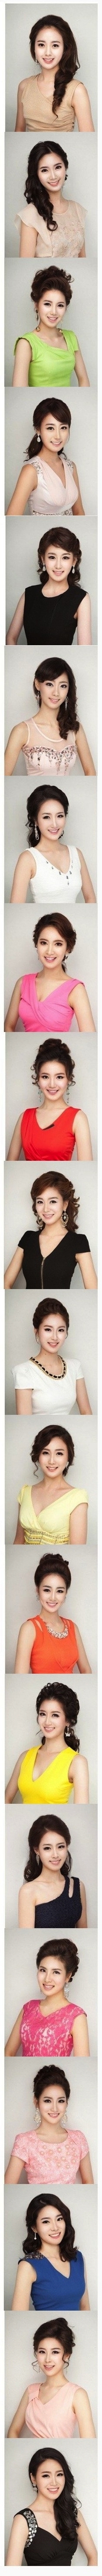 Koreas Plastic Surgery Obsession Revealed At Miss Korea 2013.